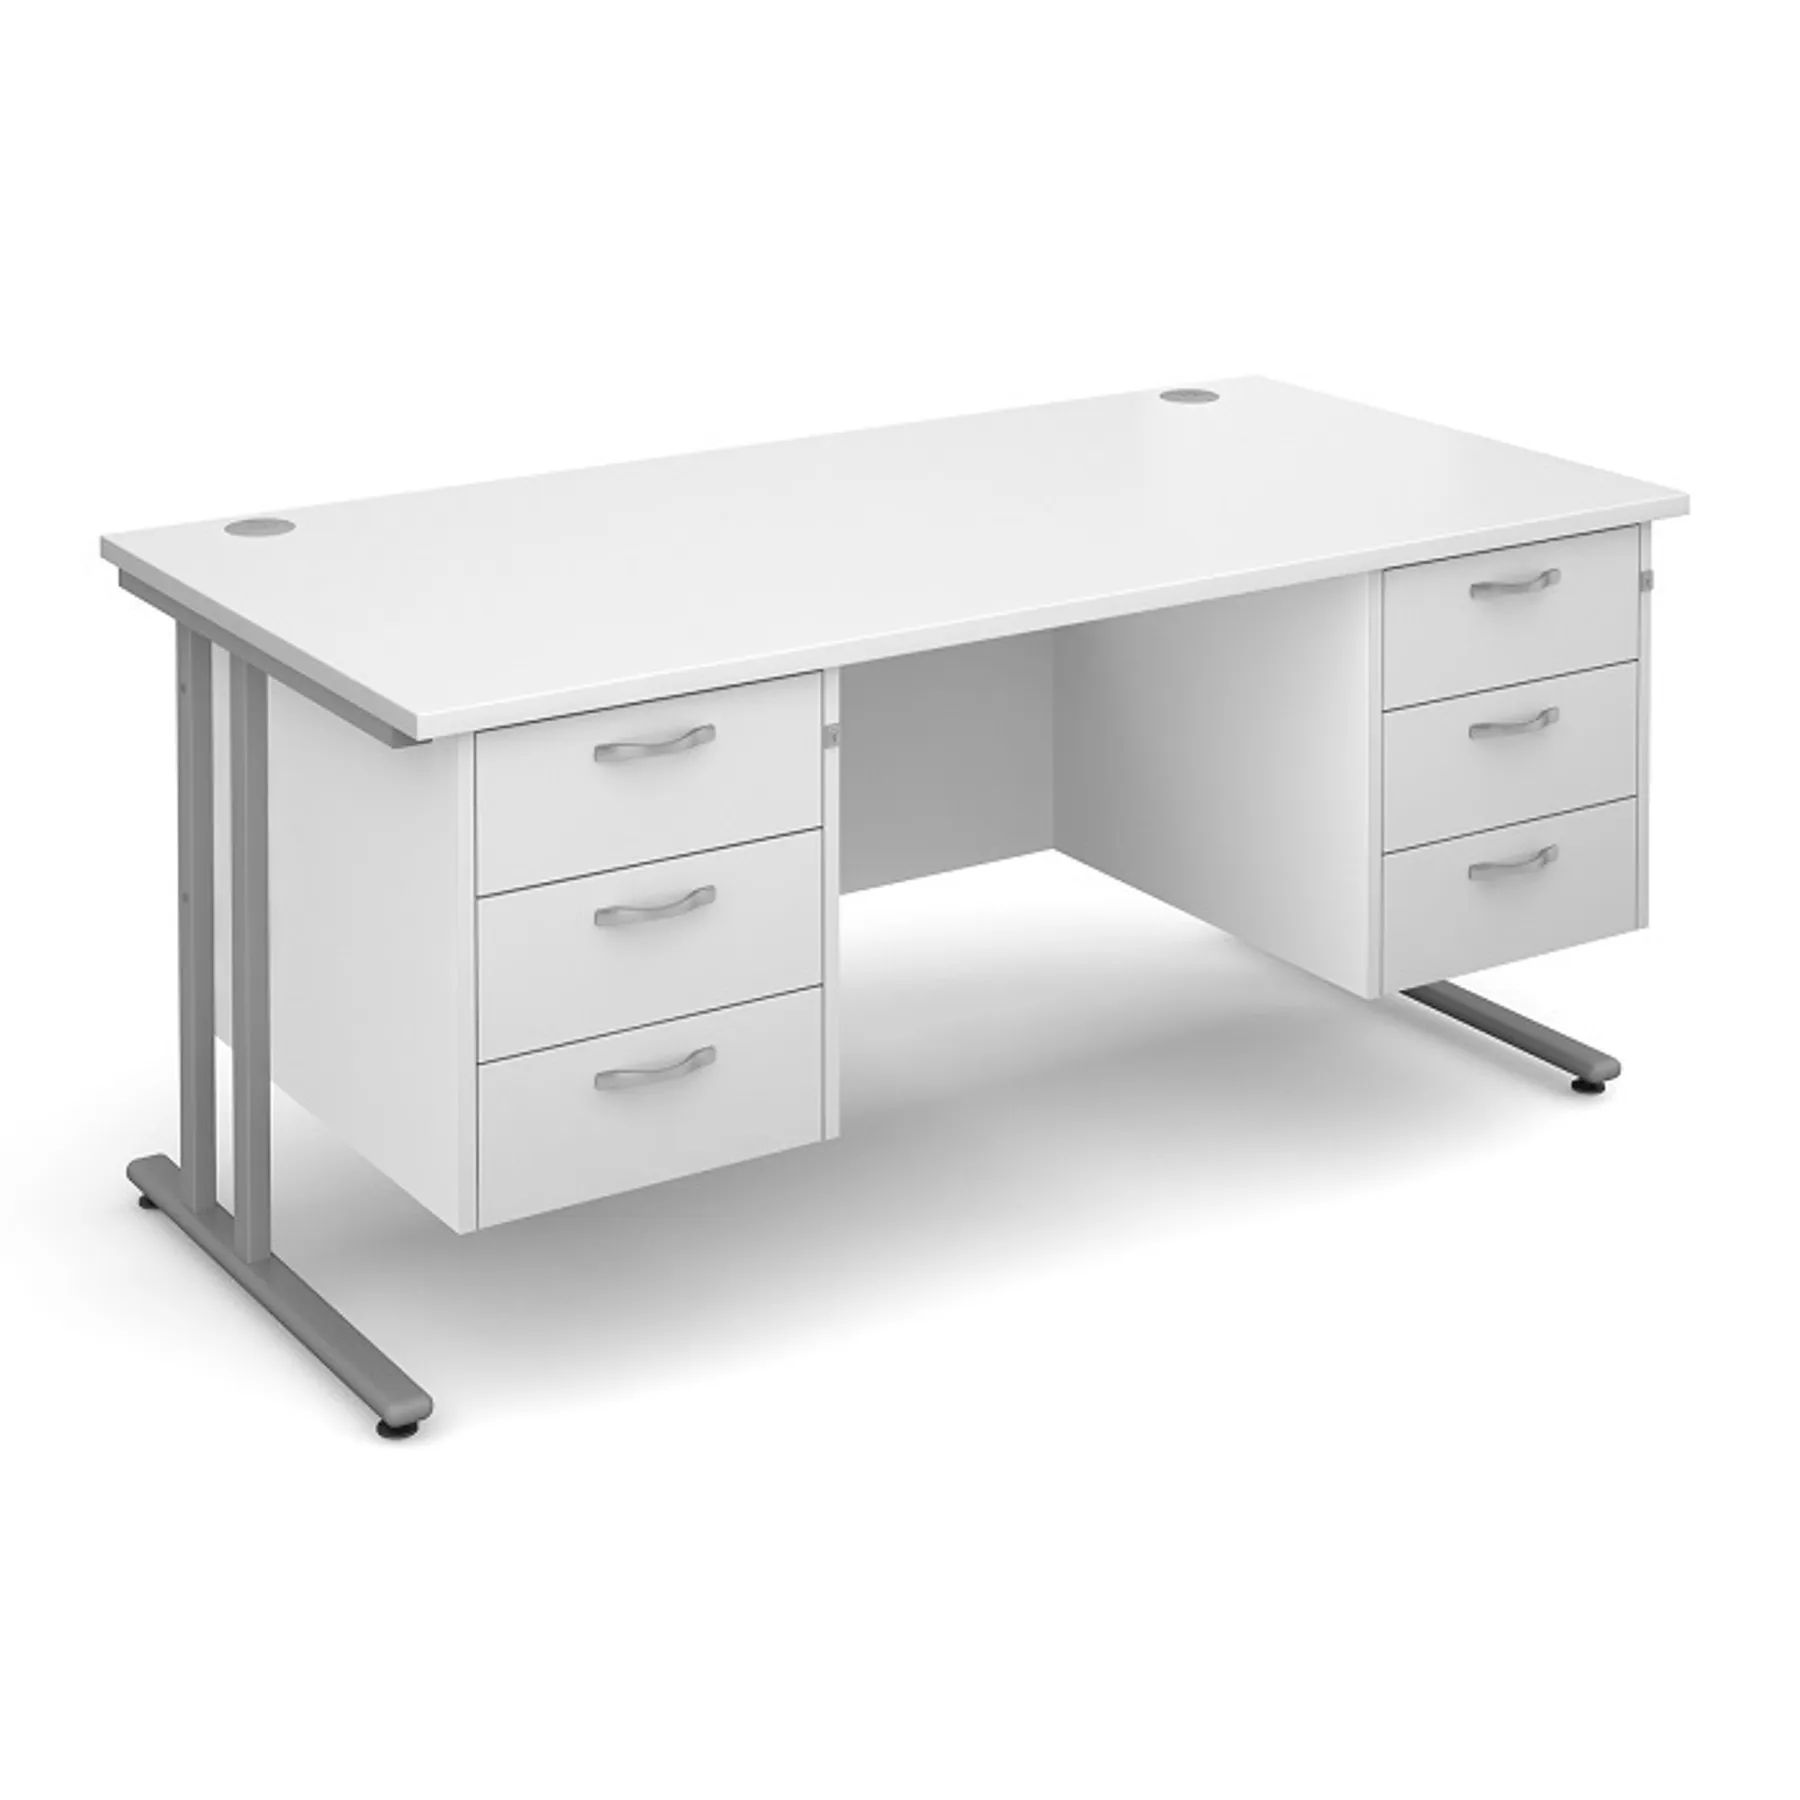 LOF Direct Dams maestro straight desk 25 SL with 2 x 3 drawer pedestals MC16 P33 S White